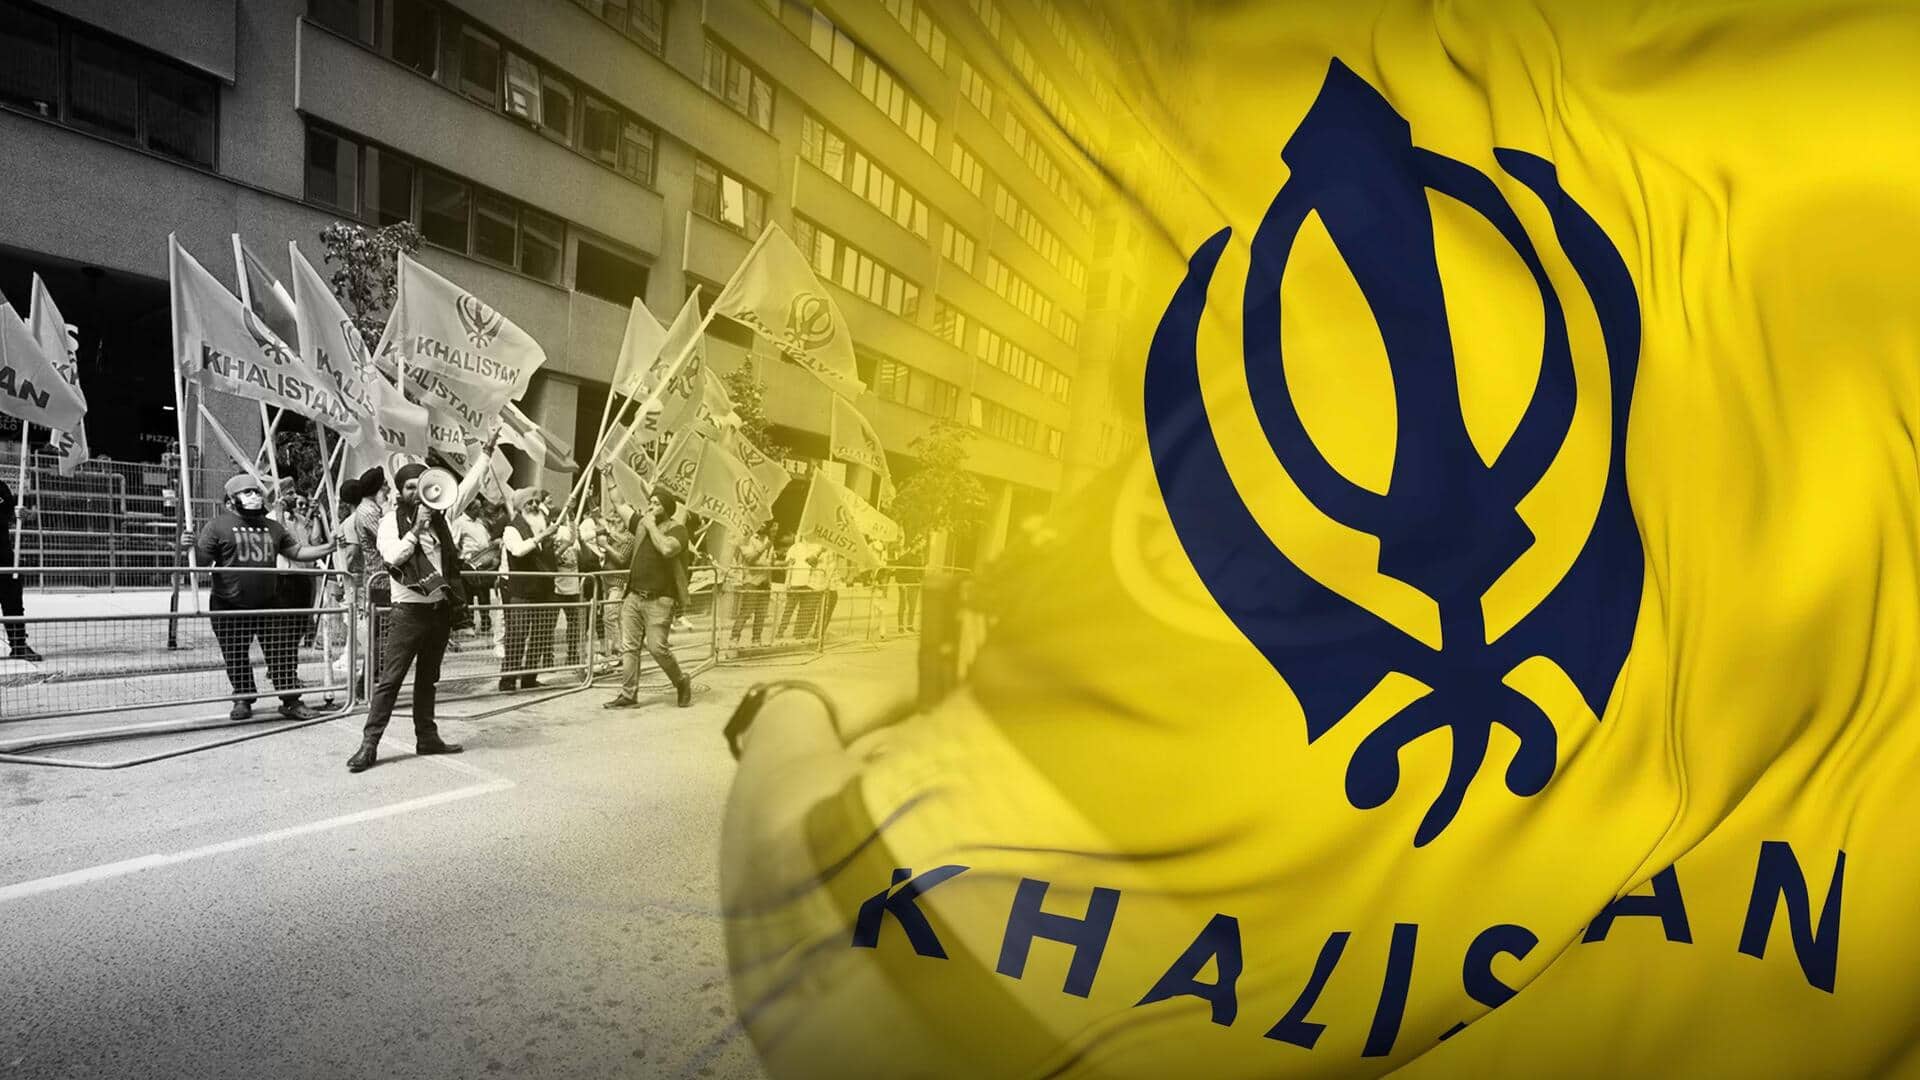 Khalistanis plan to disrupt Dussehra event in Canada: Report